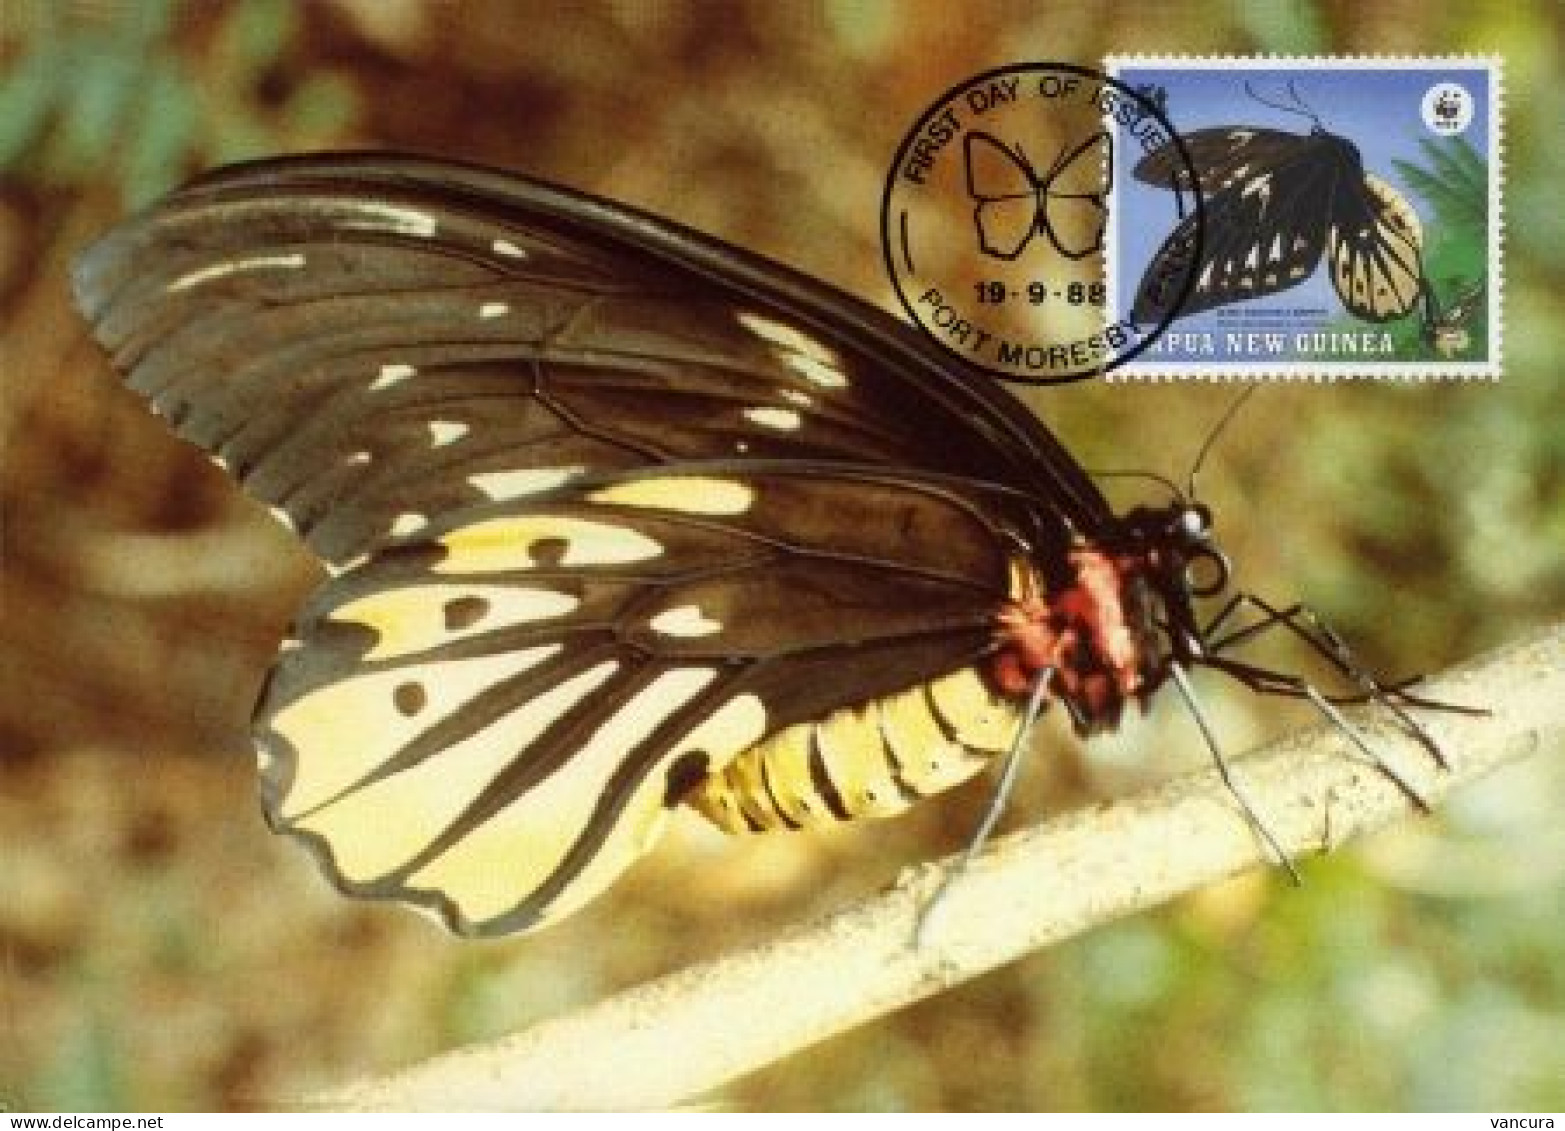 CM Papua New Guinea/WWF Protected Butterfly 1988 Queen Alexandra's Birdwing - Vlinders